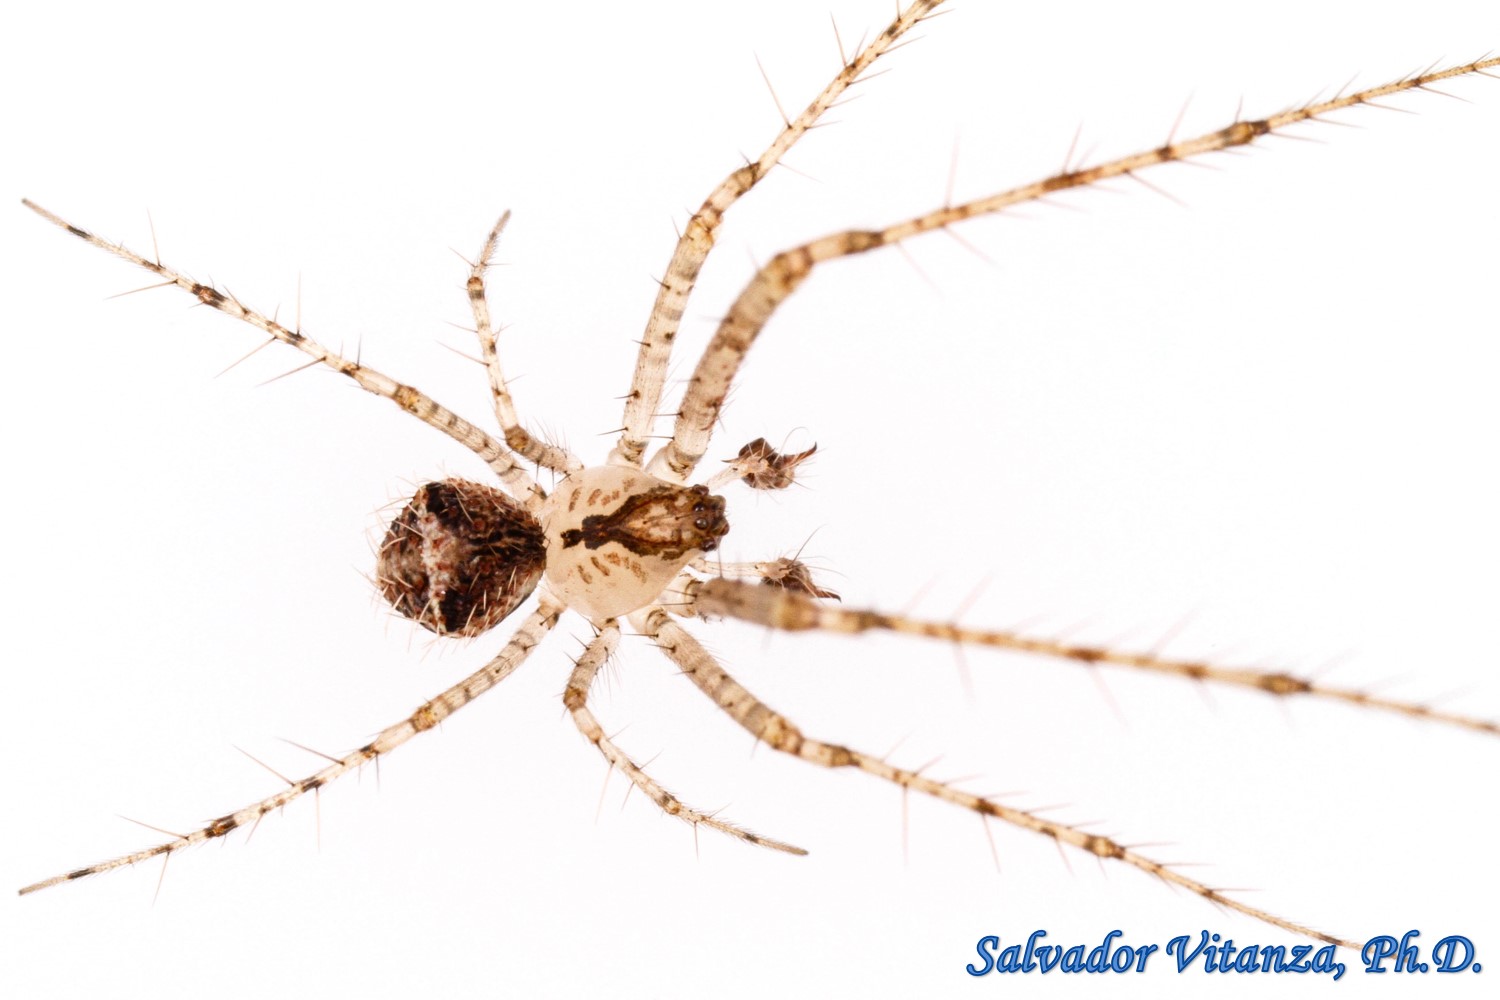 Zardoc 168 ED Exterminates Nether Spiders - Medivia 